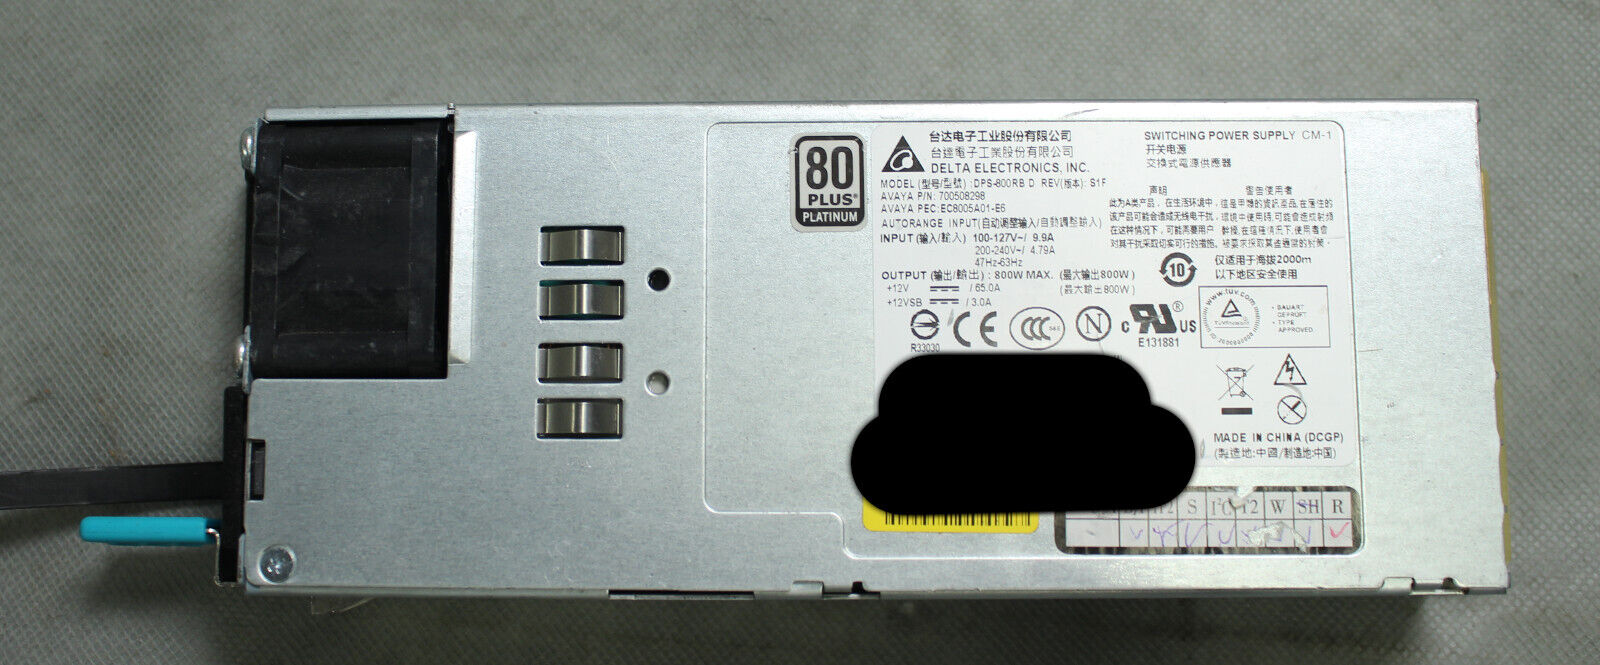 Avaya DPS-800RB 800W Switching Power Supply 700508298